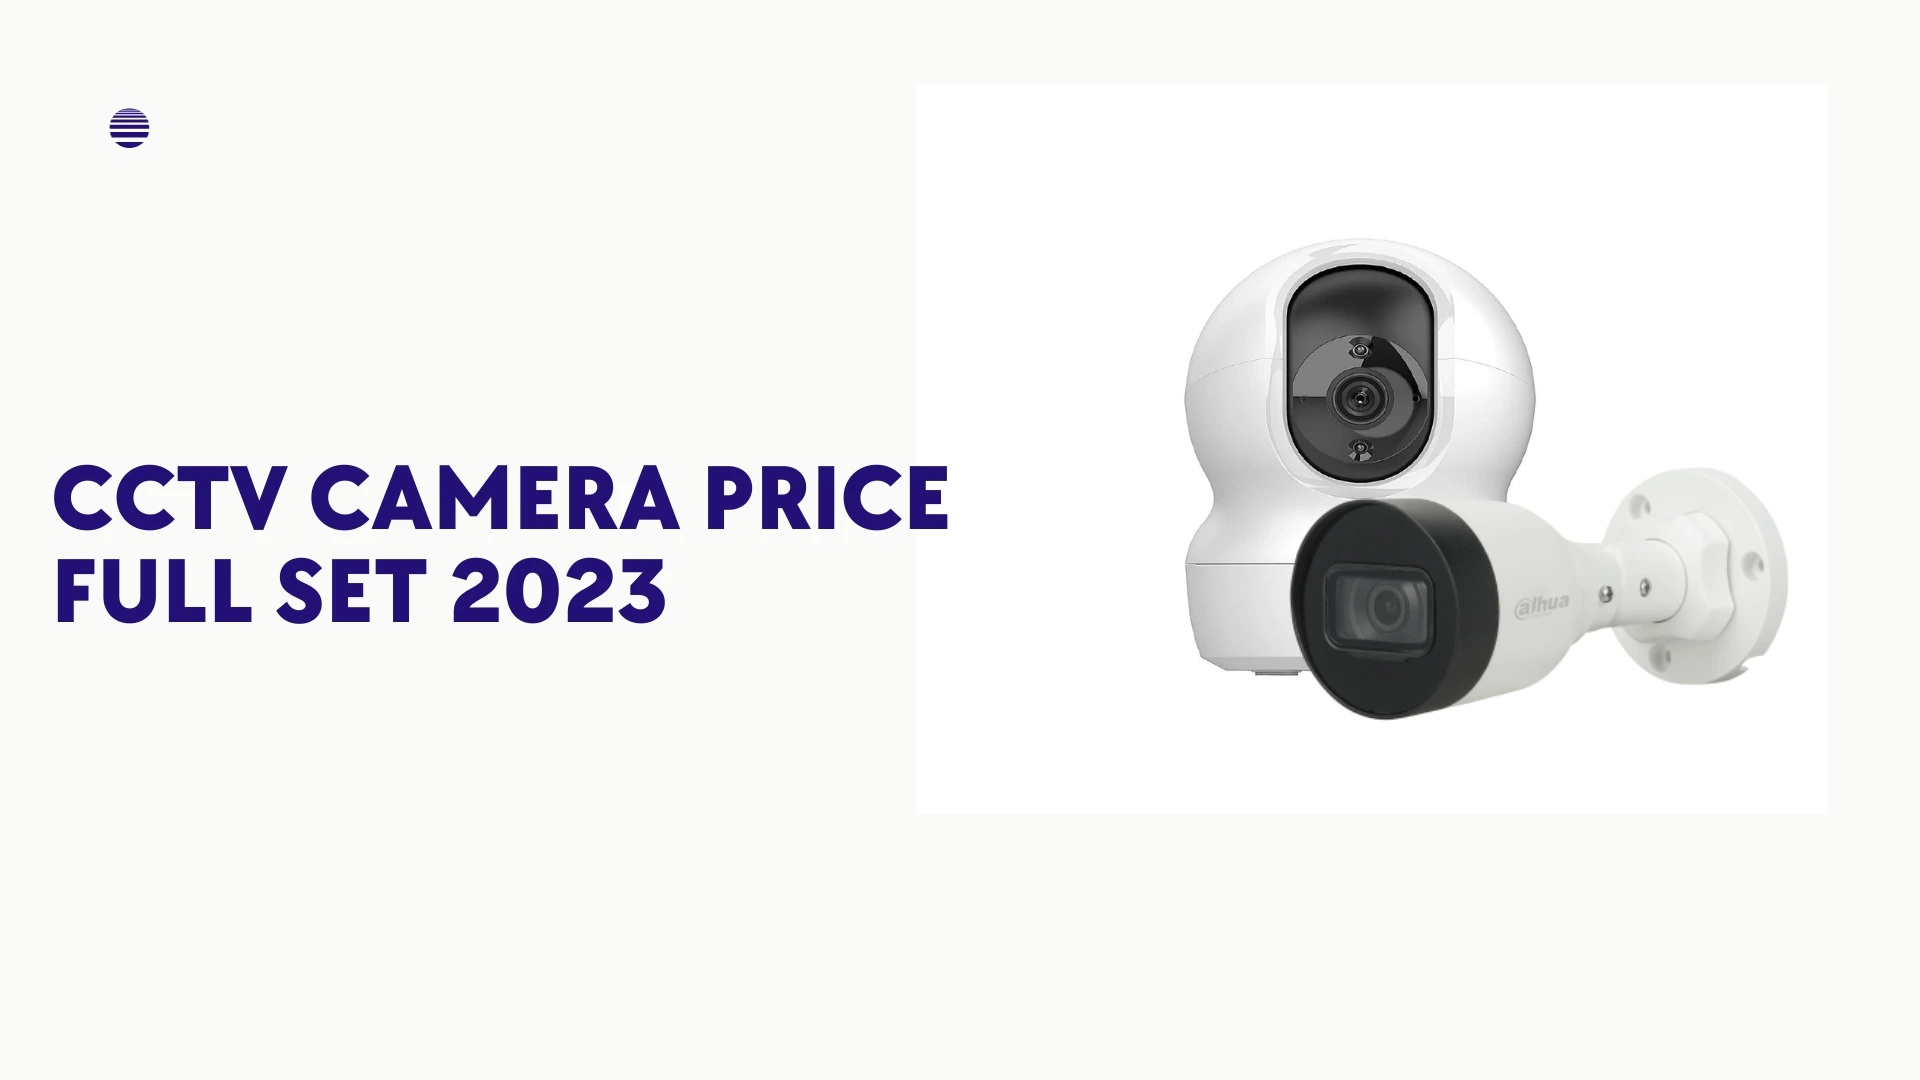 CCTV Camera Price Full Set 2023